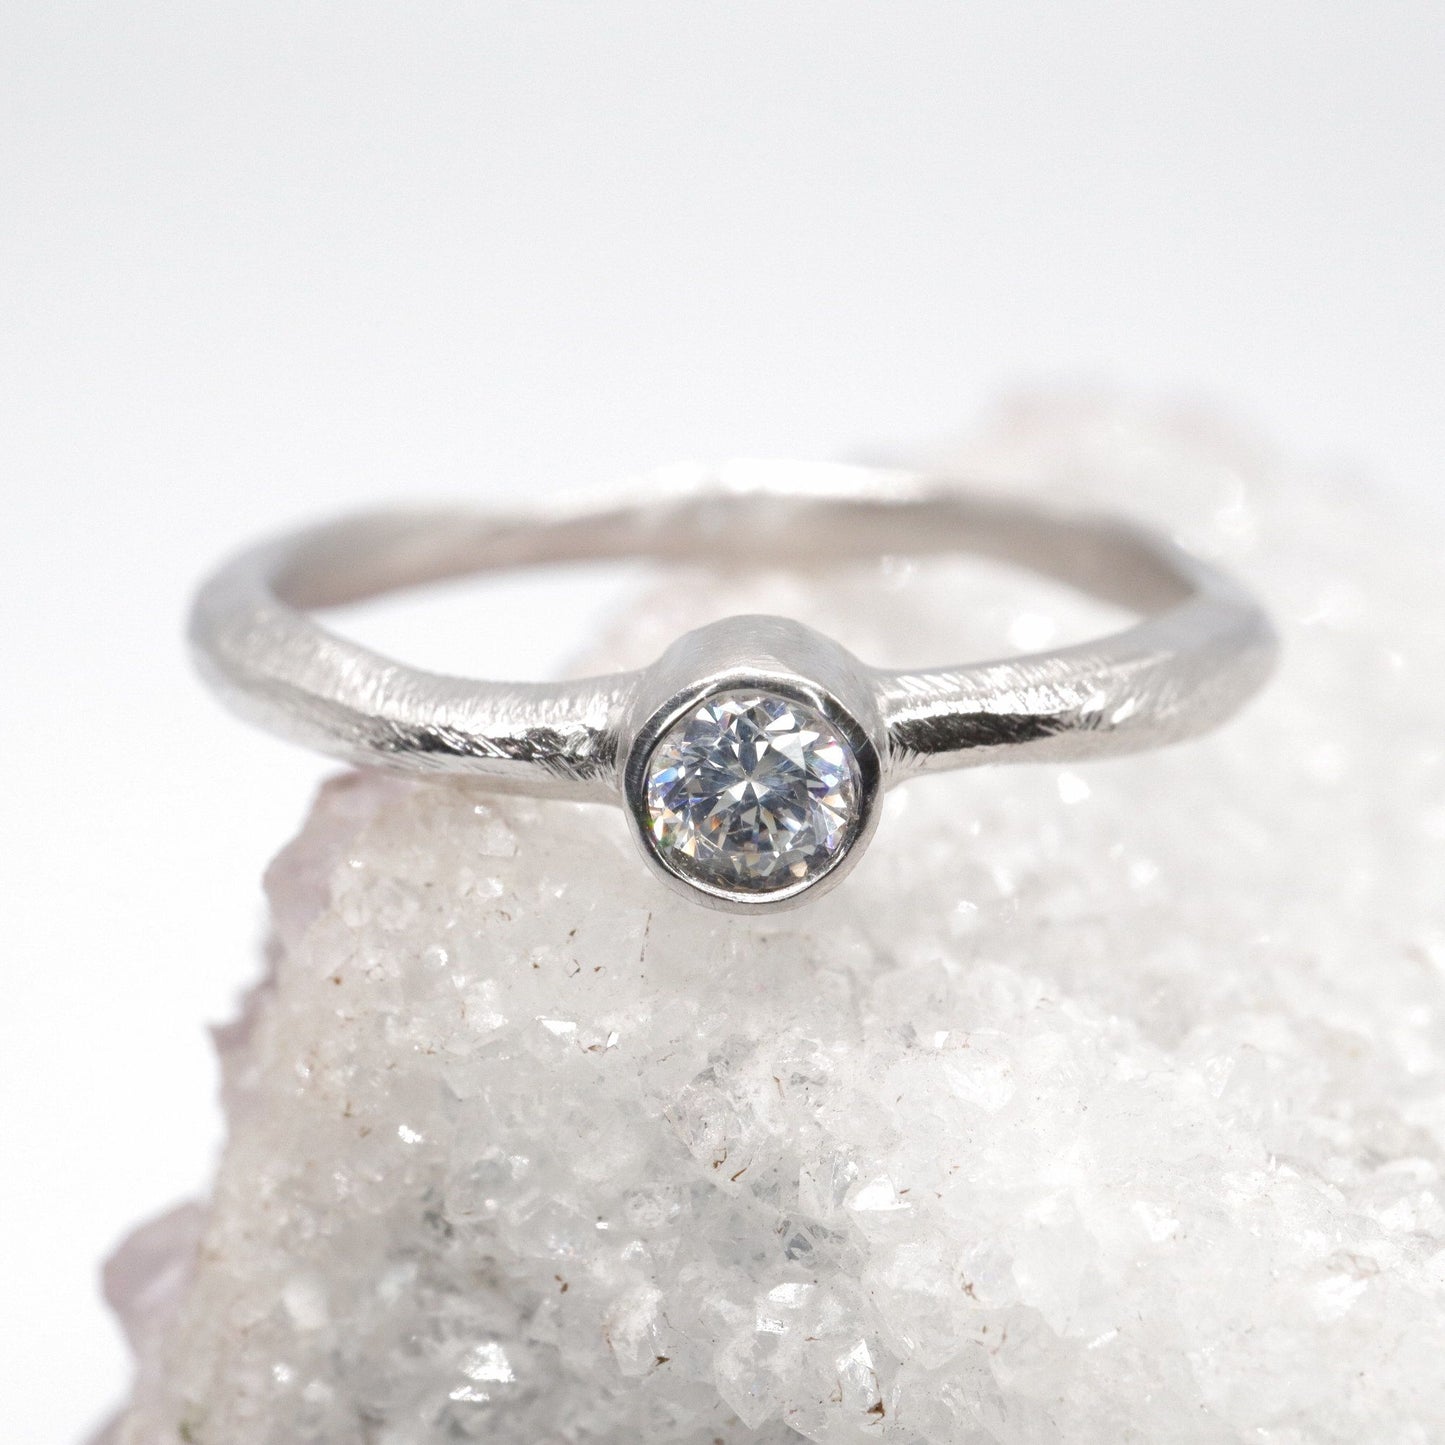 Solitaire 0.25ct diamond white gold minimalist narrow ring, Beach Sand design.